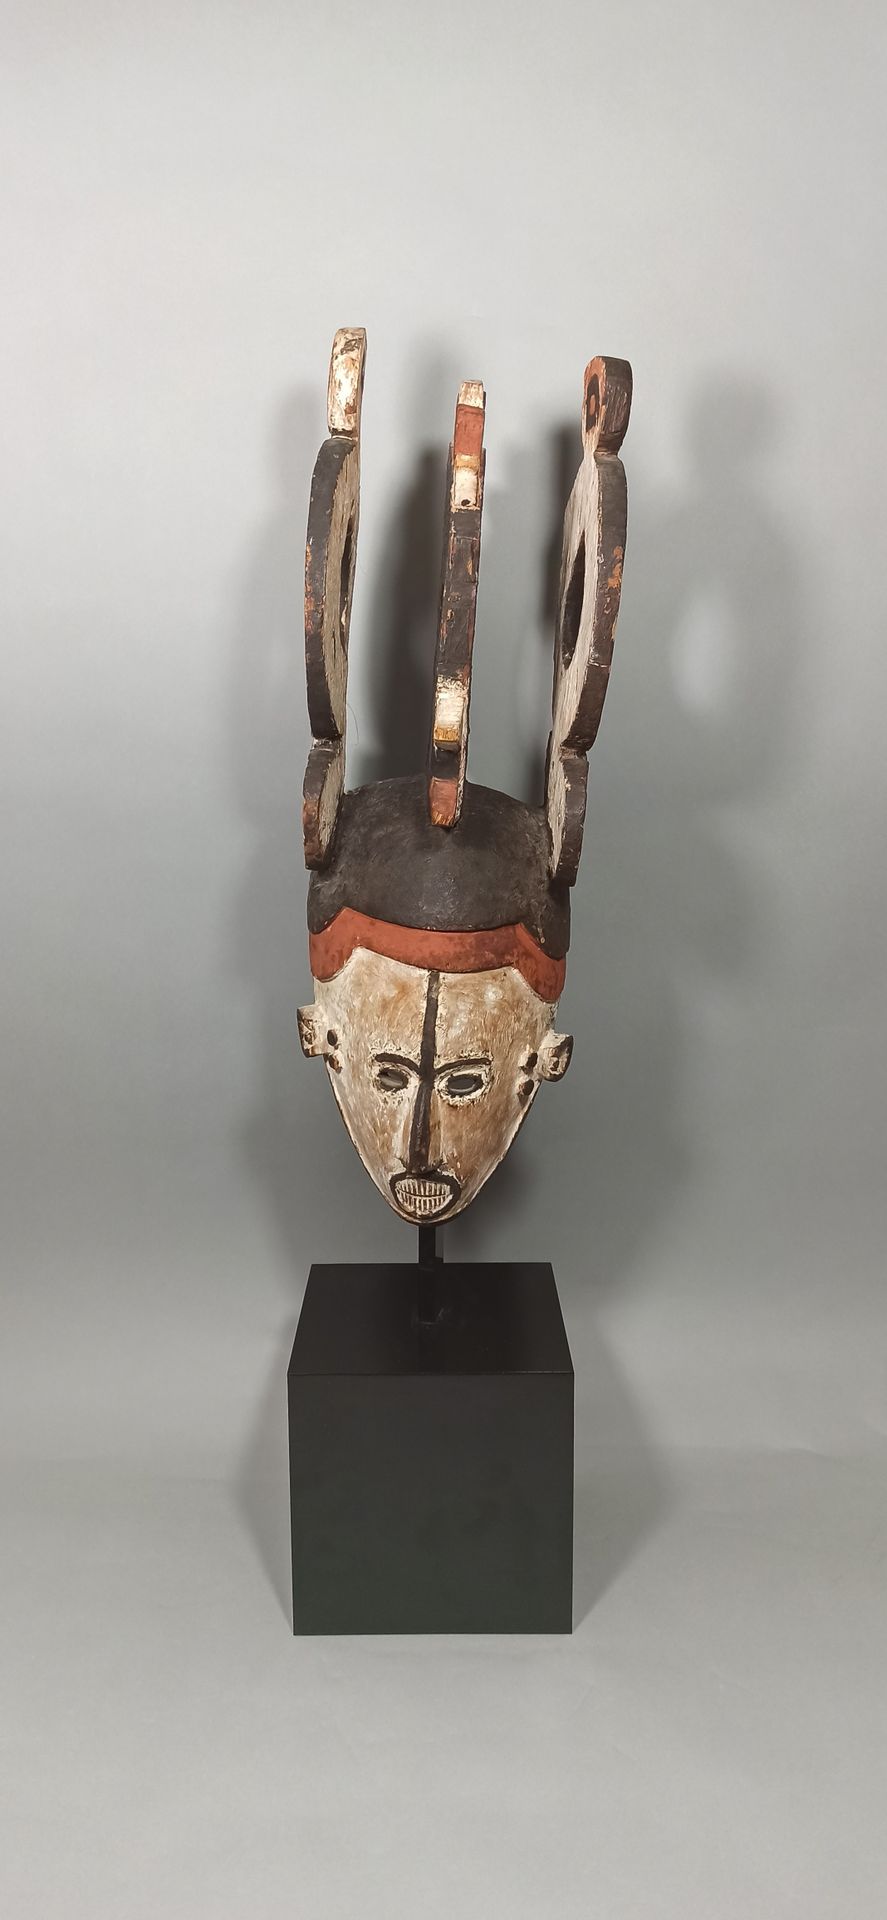 Null Große Igbo "mmwo" Maske, Nigeria.

Höhe: 60 cm